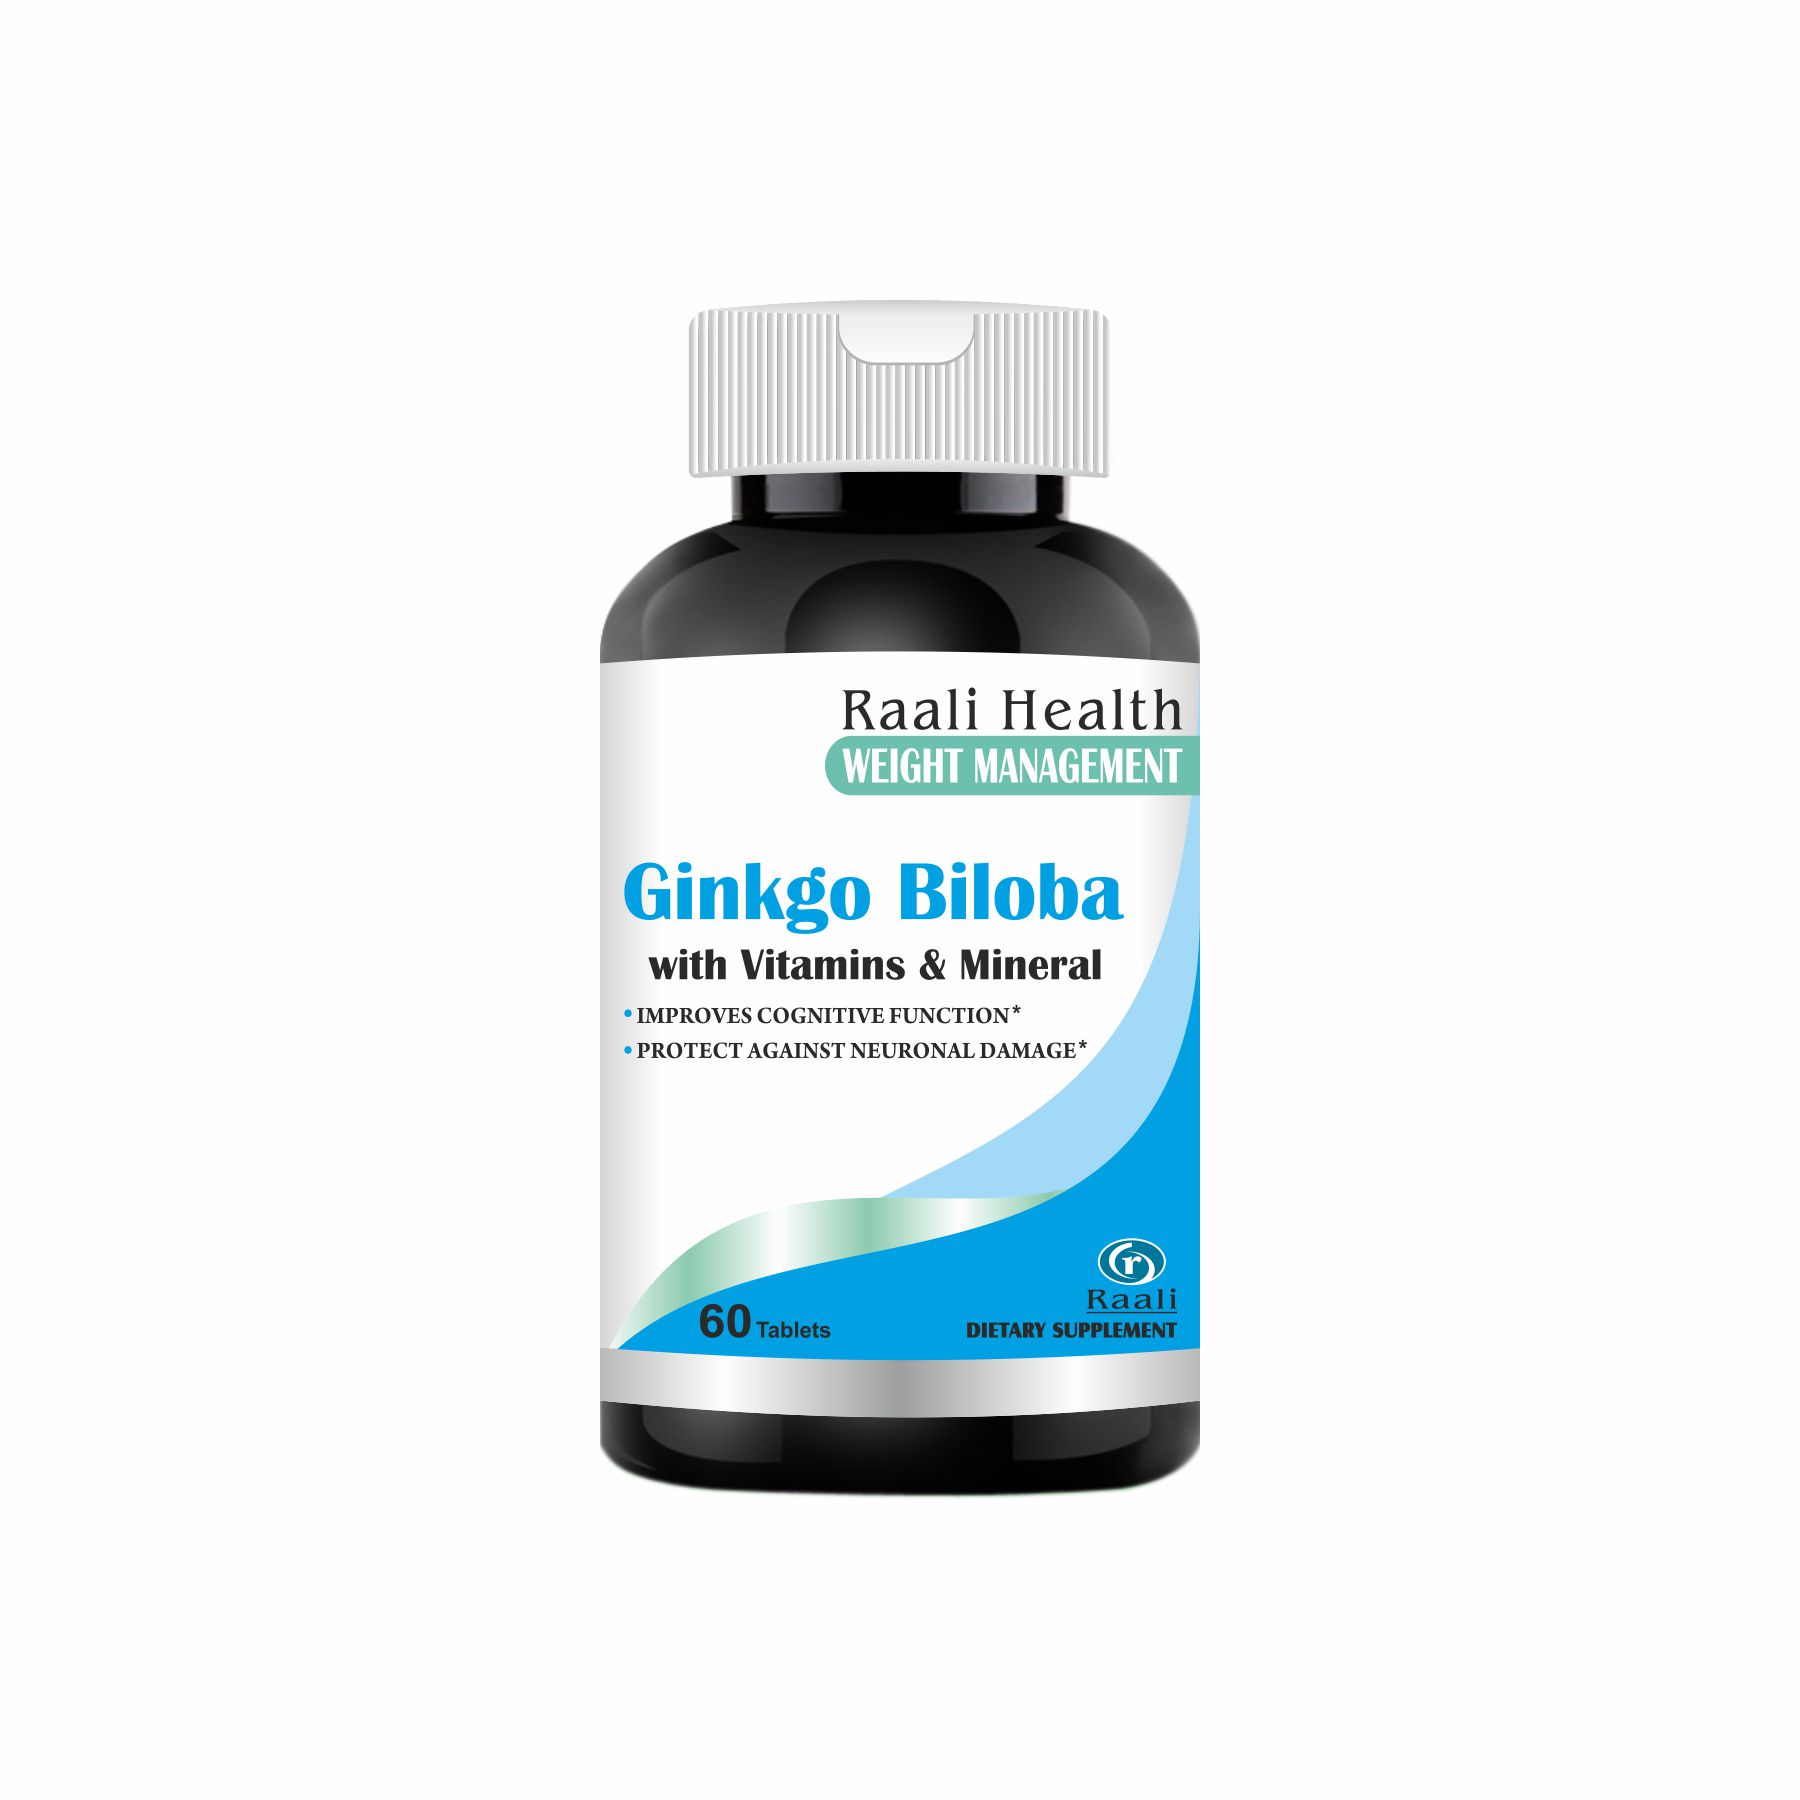 Ginkgo biloba with vitamin & minerals, weight management, healthy body